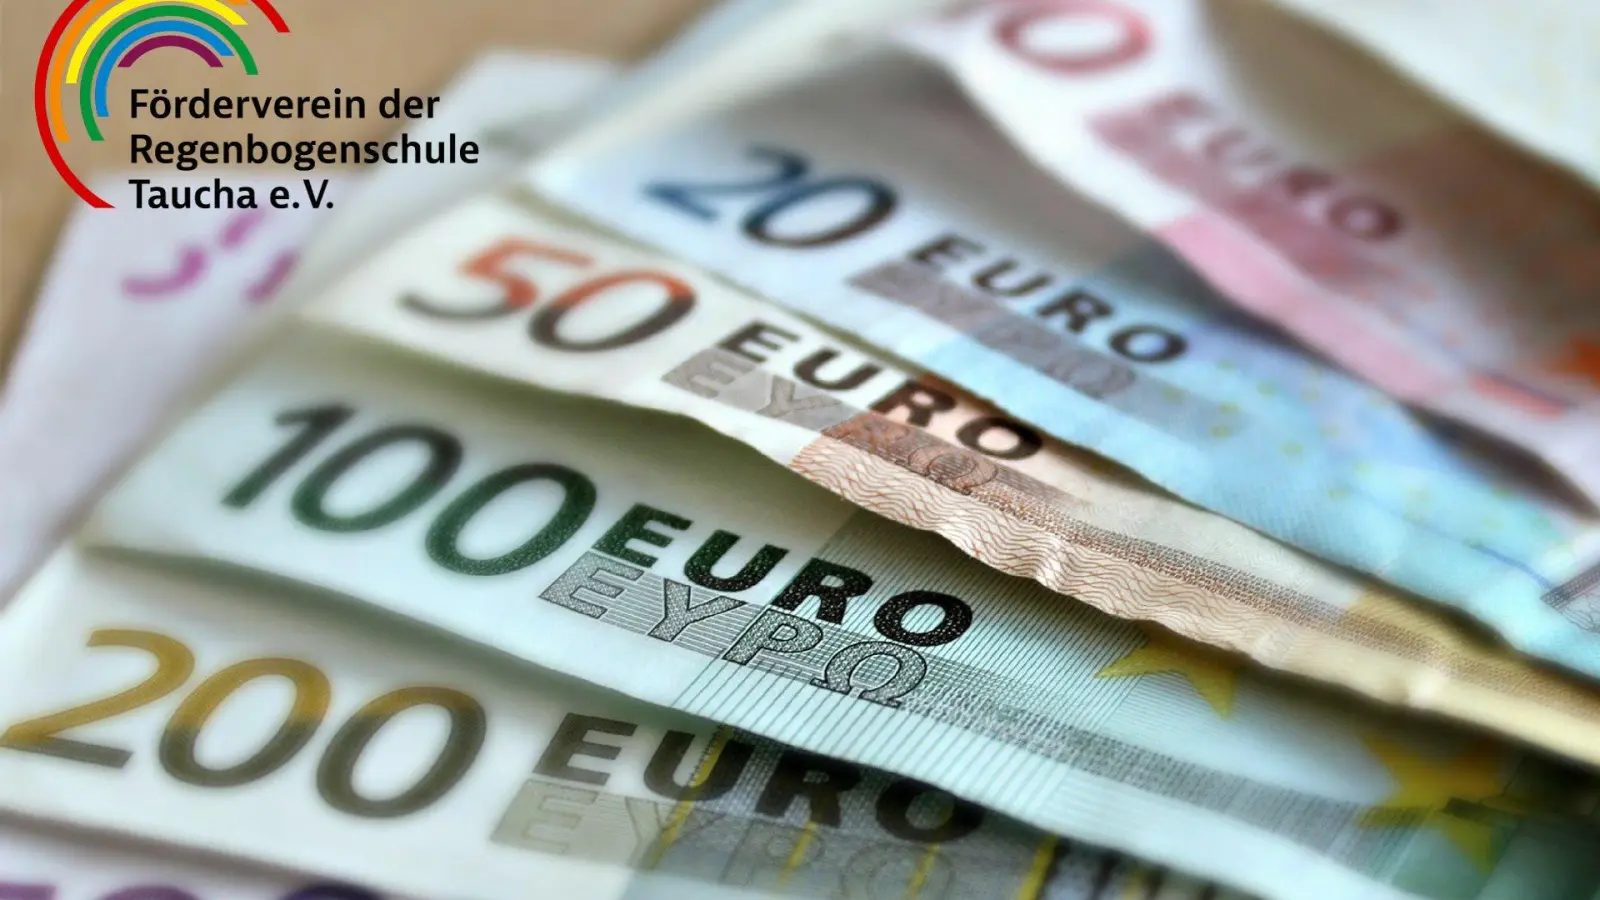 Unterstützung gefragt: Regenbogenschule Taucha kann 2500 Euro gewinnen (Foto: taucha-kompakt.de)